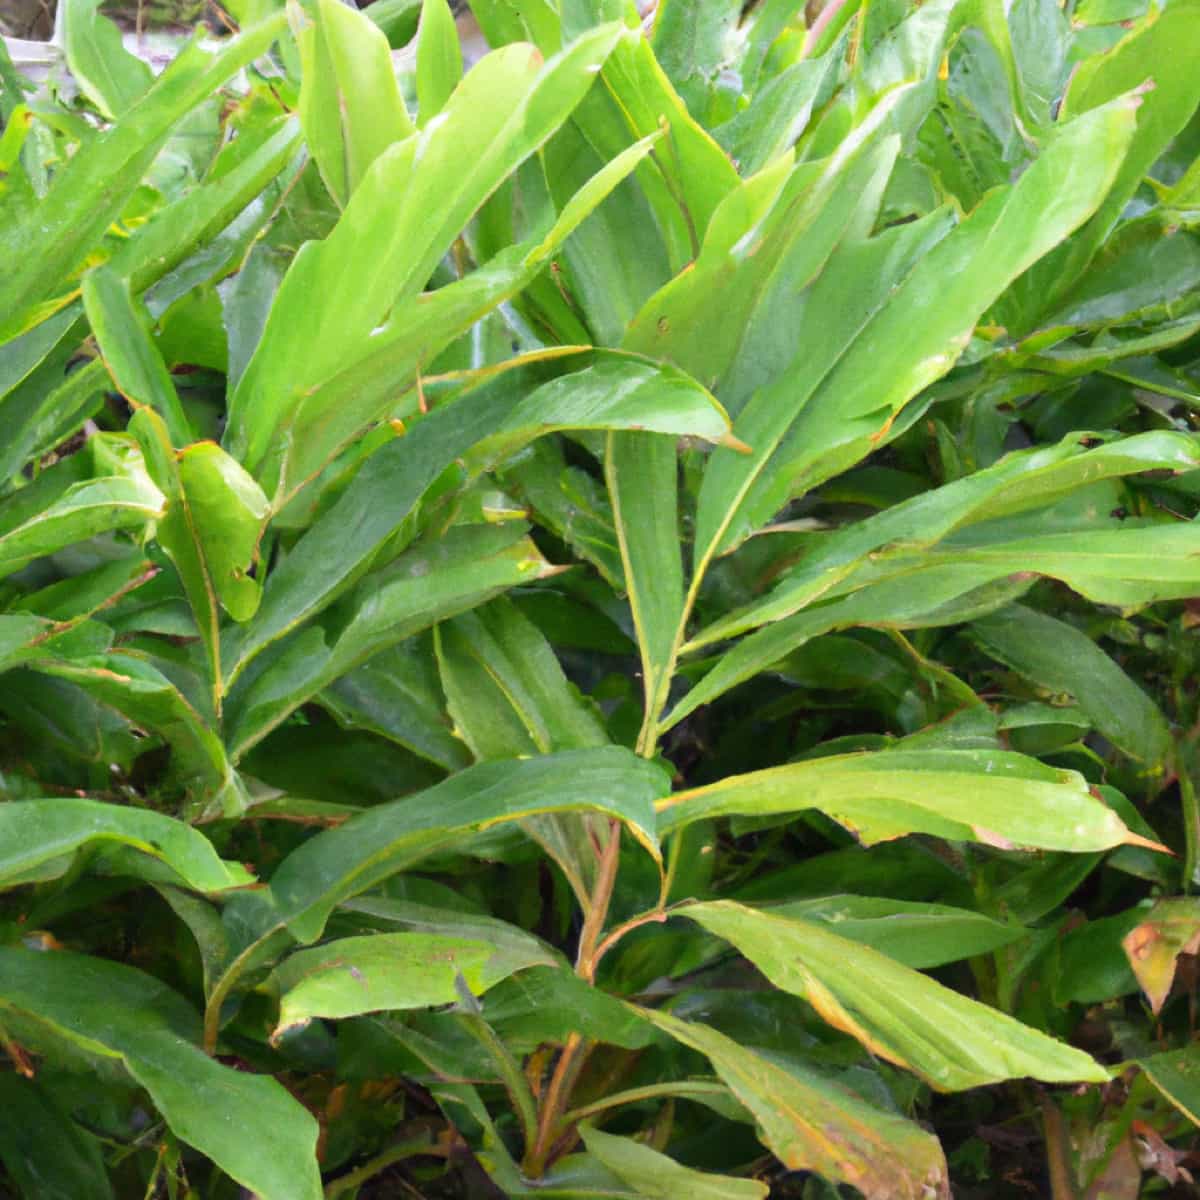 Cardamom Plants